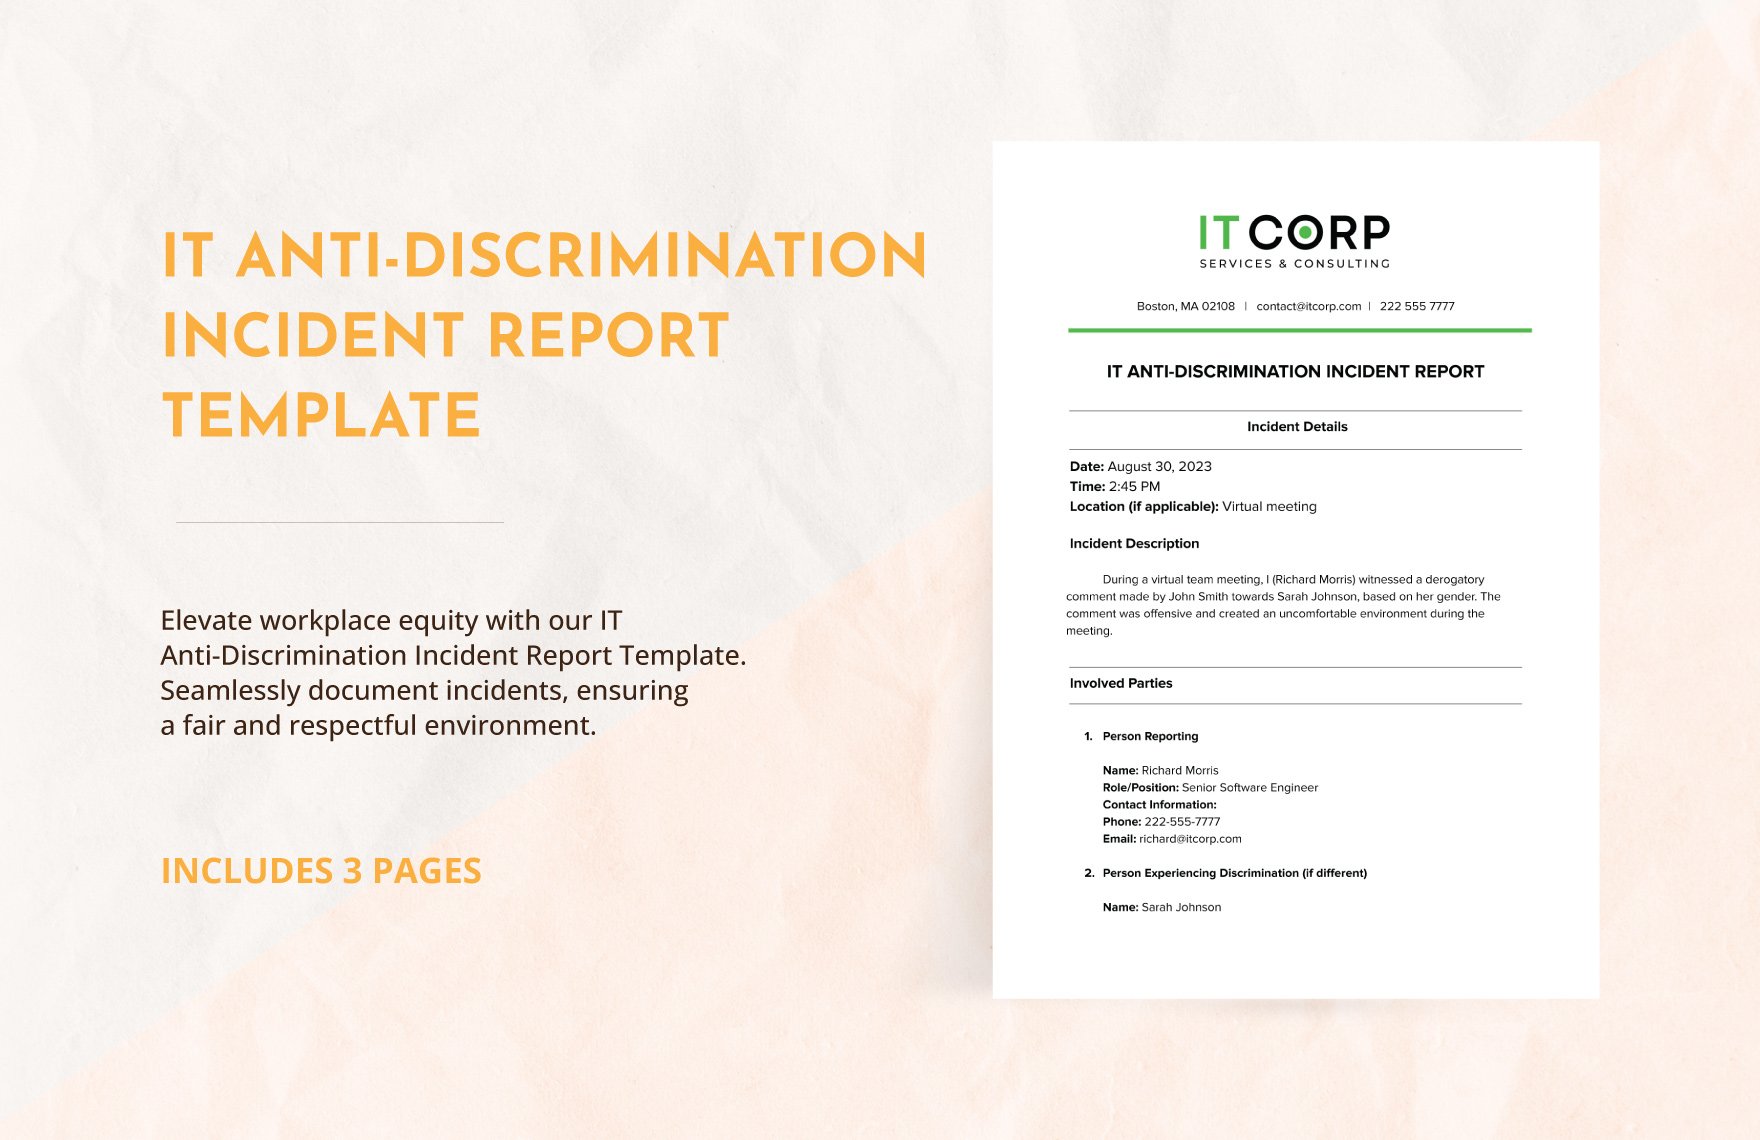 IT Anti-discrimination Incident Report Template